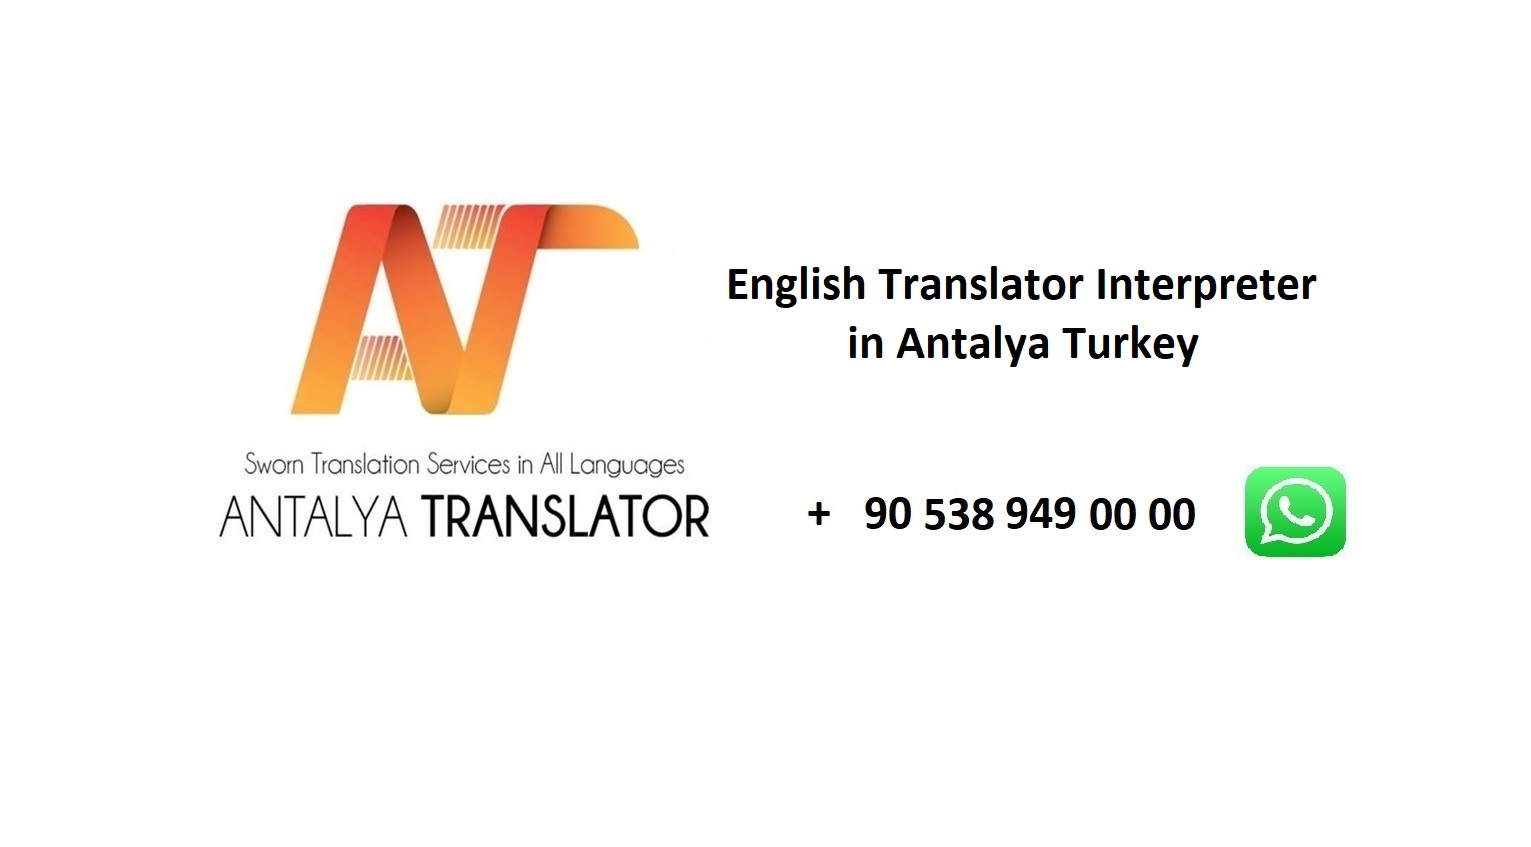 English translator interpreter in Antalya Turkey sworn translation agency interpreting services English to Turkish Arabic translators